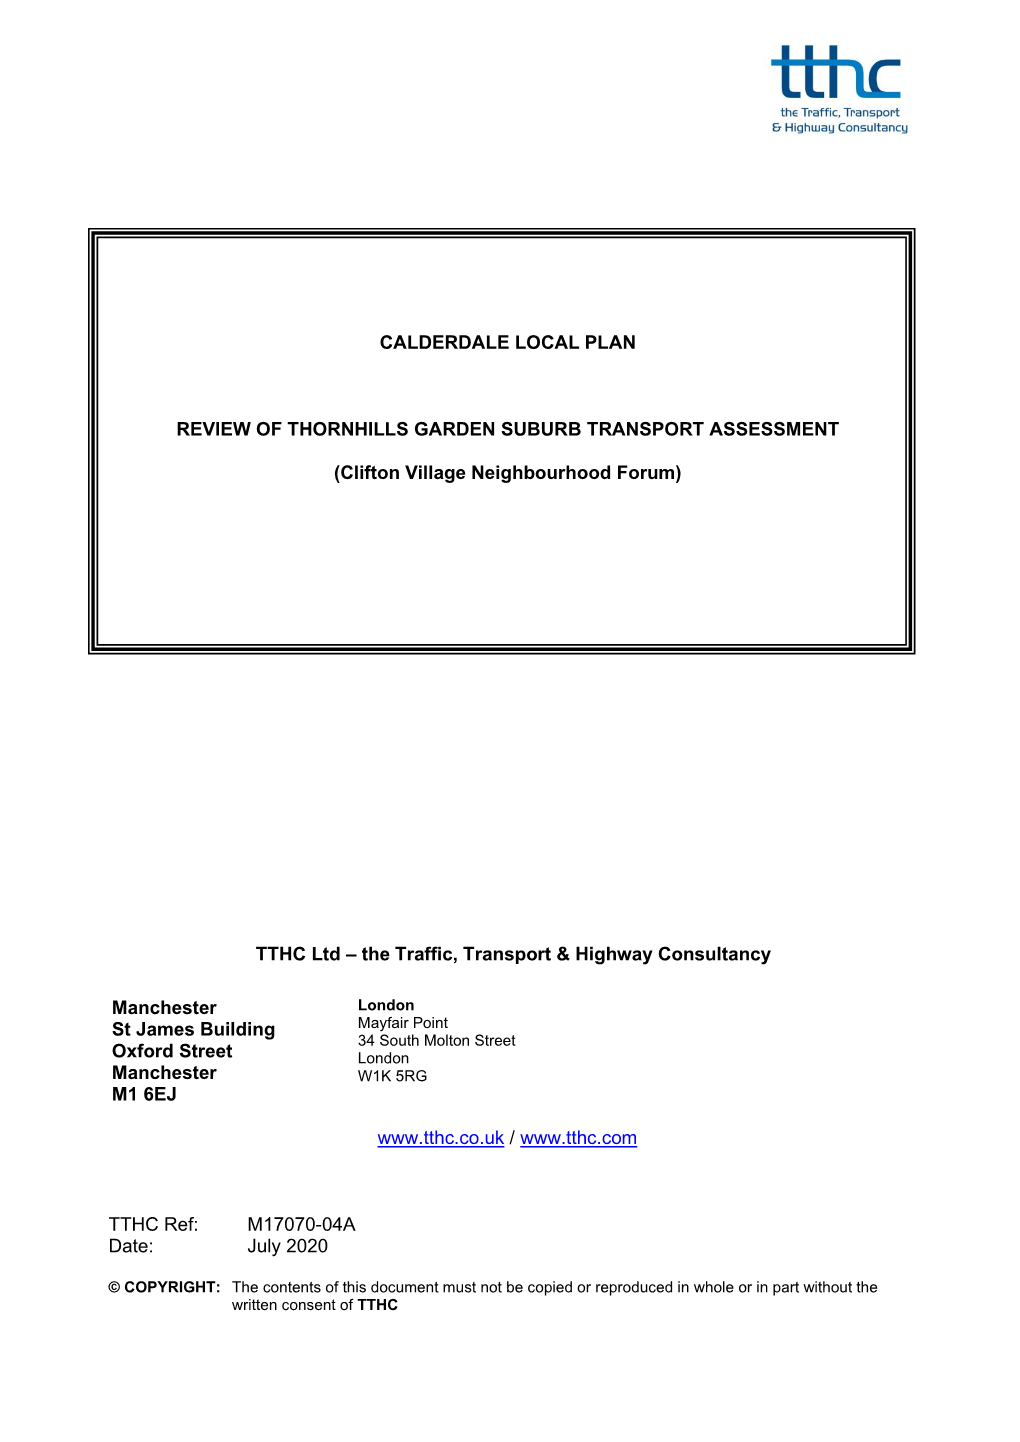 TTHC Ltd – the Traffic, Transport & Highway Consultancy Manchester